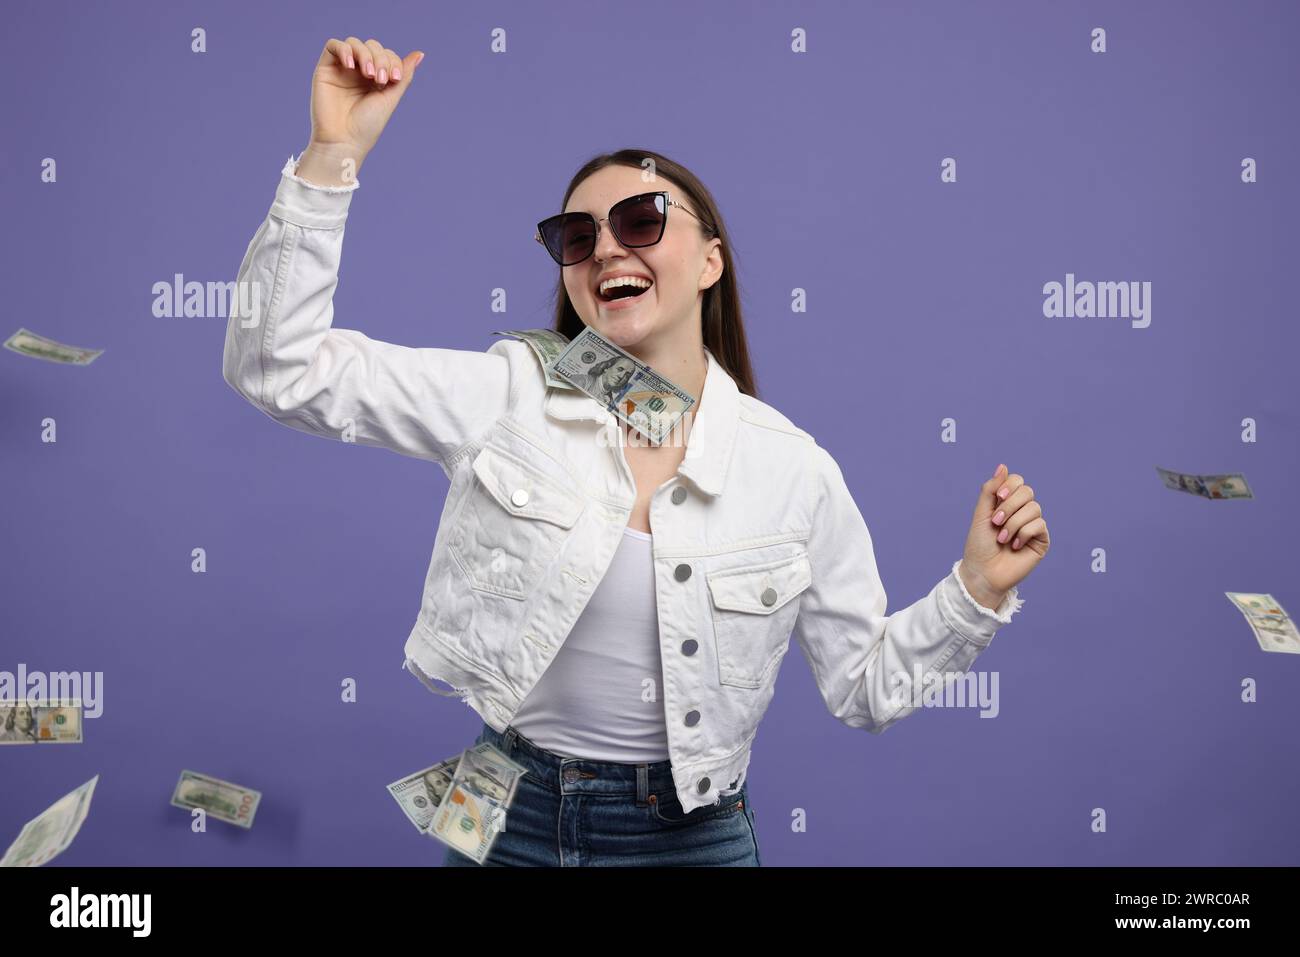 Happy woman under money shower on purple background Stock Photo